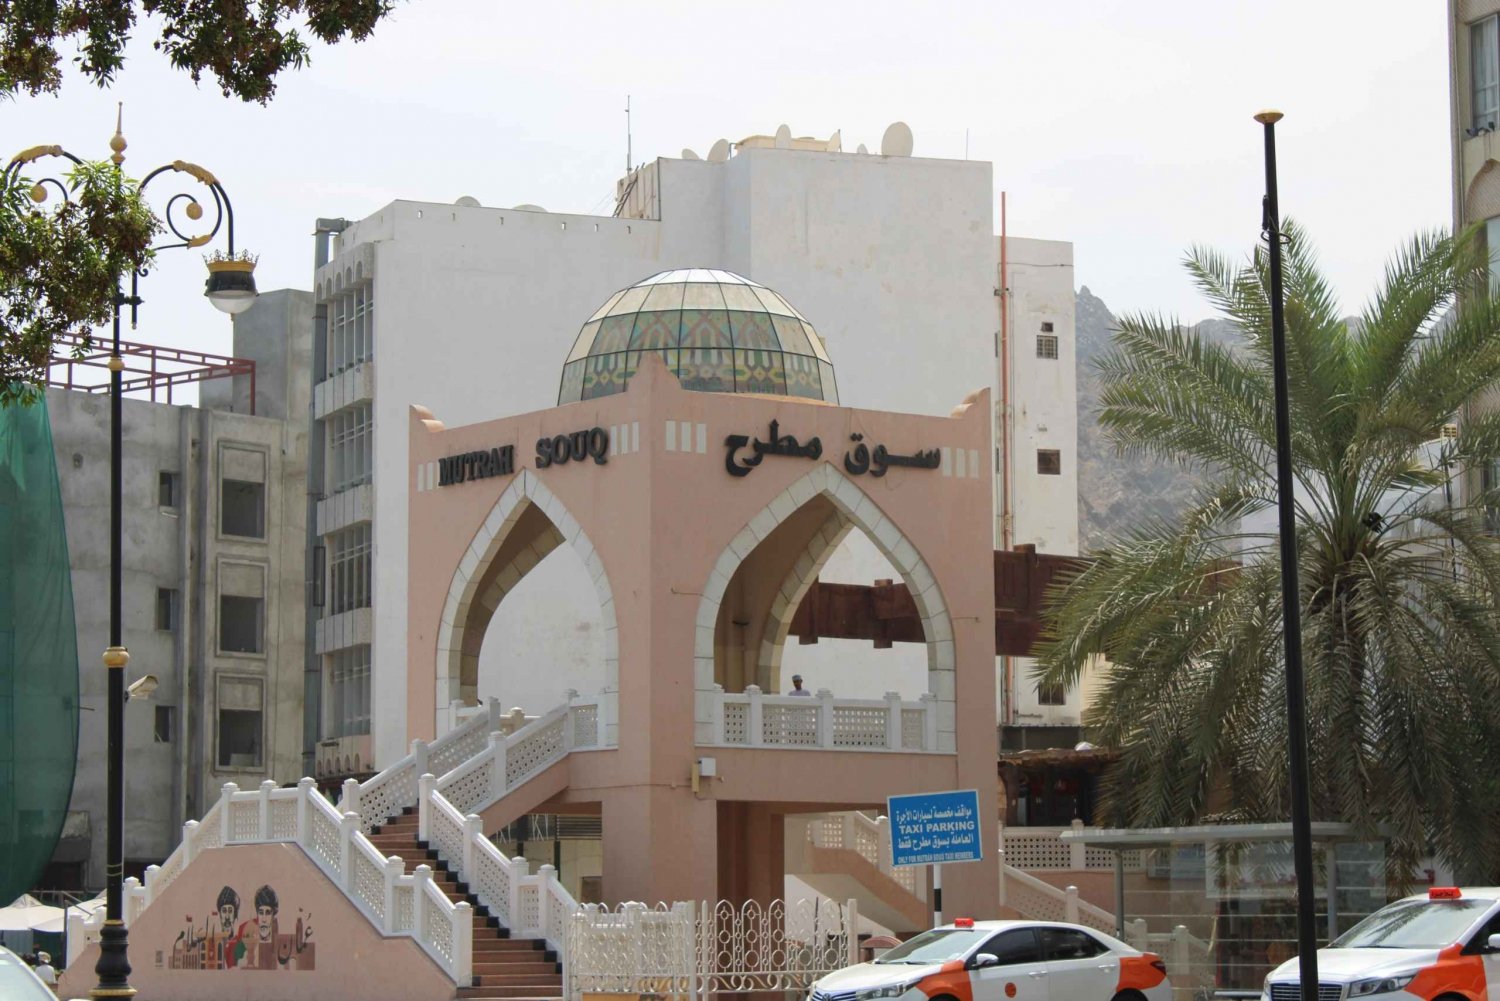 Muscat: Suuri moskeija, Souk ja oopperatalo Puolipäiväretki